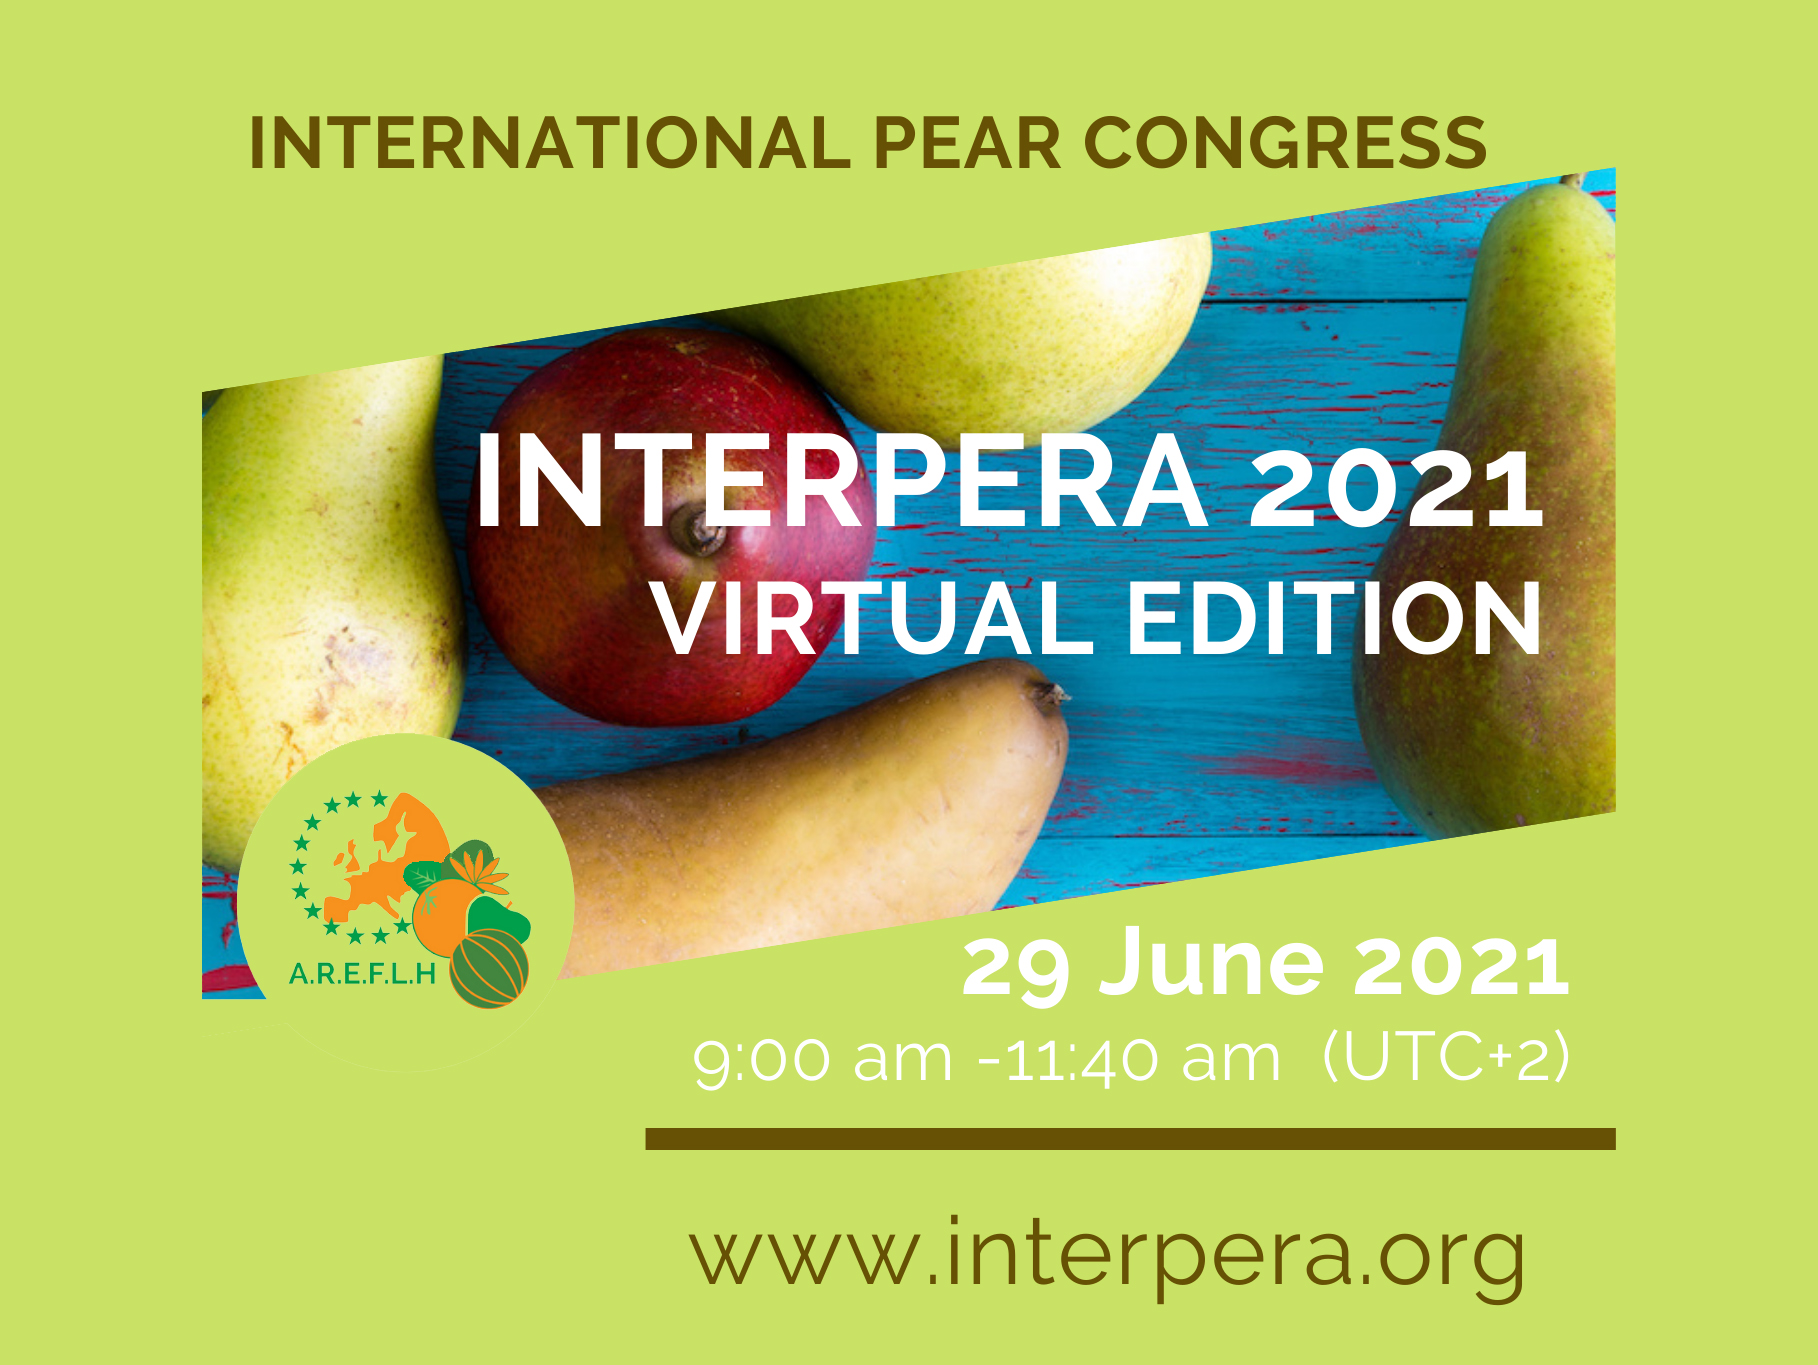 The International Pear Congress back as a webinar